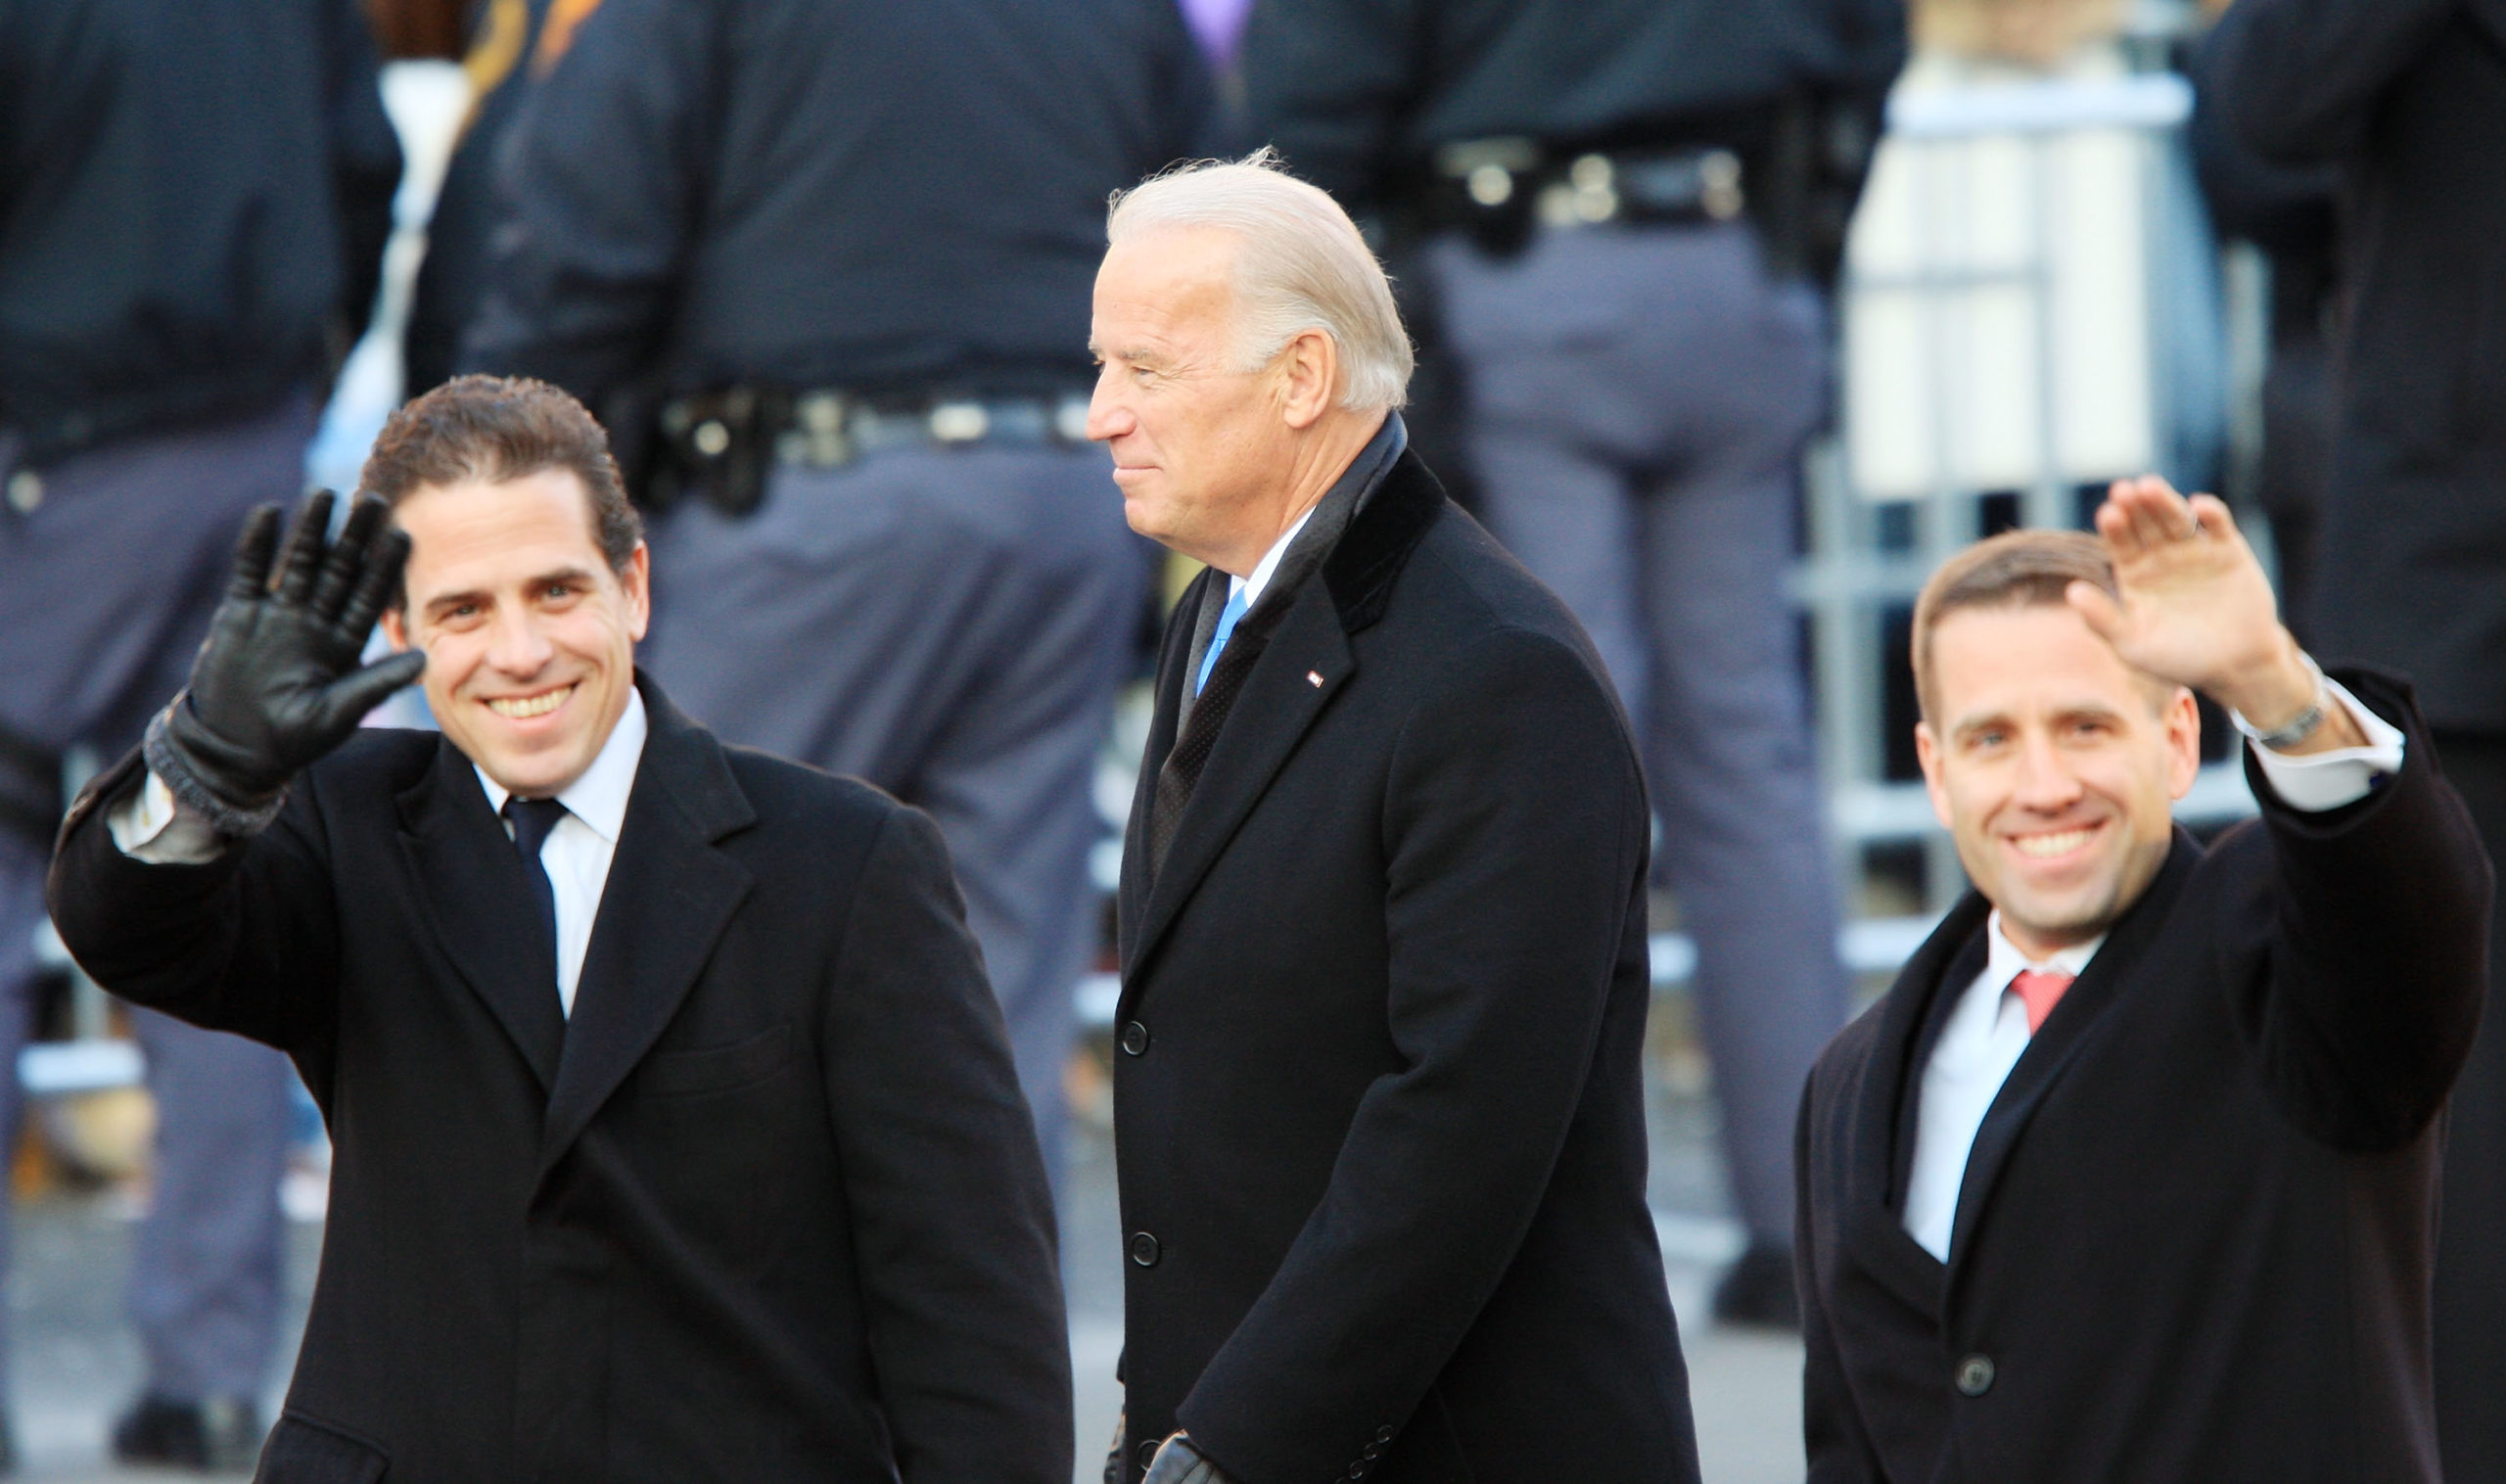 WASHINGTON, D.C. - JANUARY 20: Vice-President Joe Biden and sons Hunter Biden (L) and Beau Biden walk in the Inaugural Parade January 20, 2009 in Washington, DC. (Photo by David McNew/Getty Images)